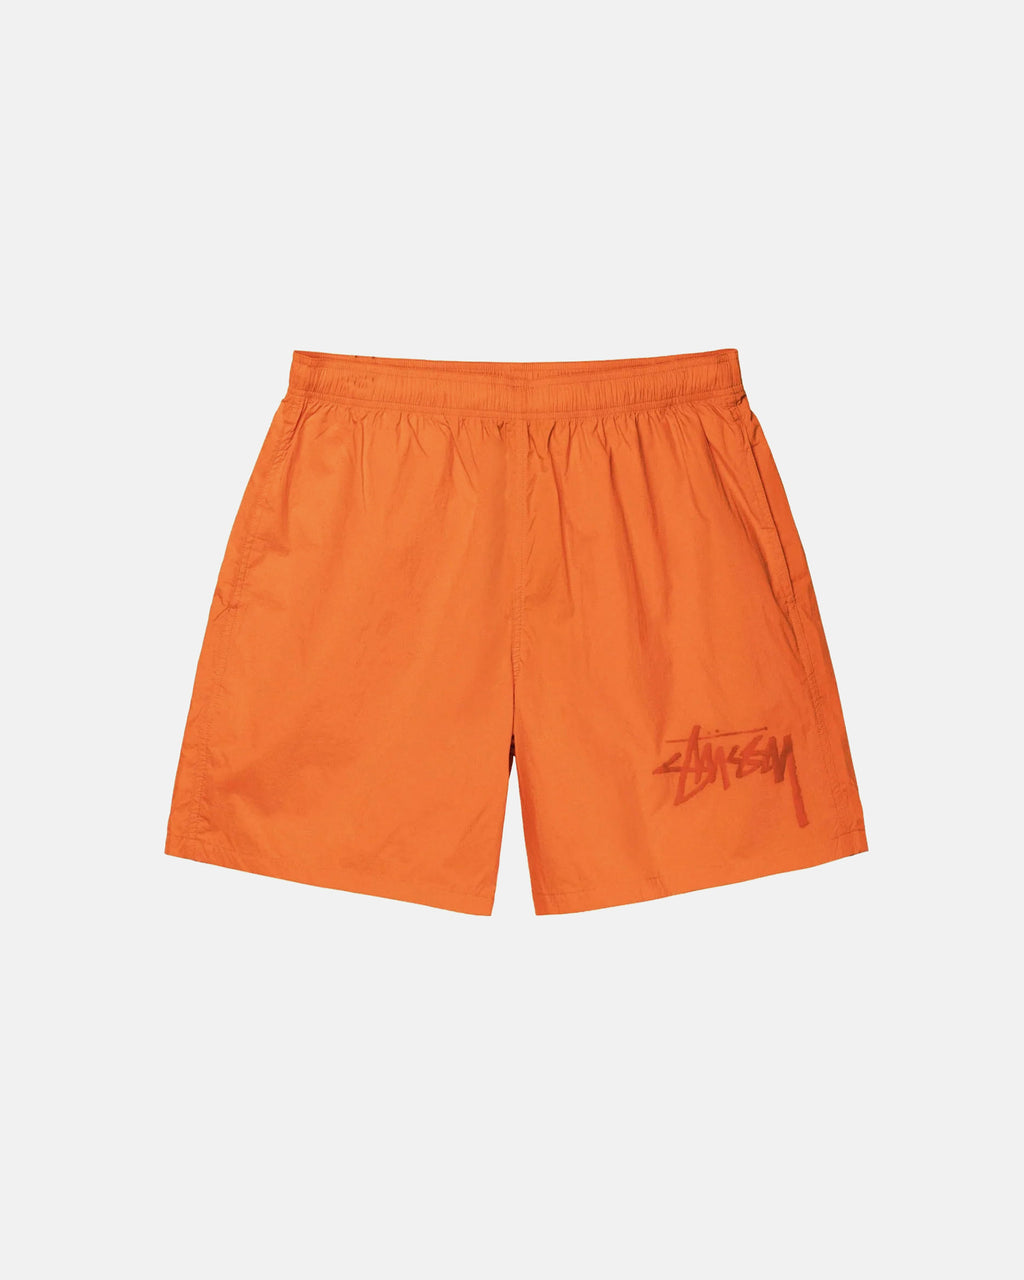 Hot Deals Stussy Shorts - Orange Big Stock Nylon